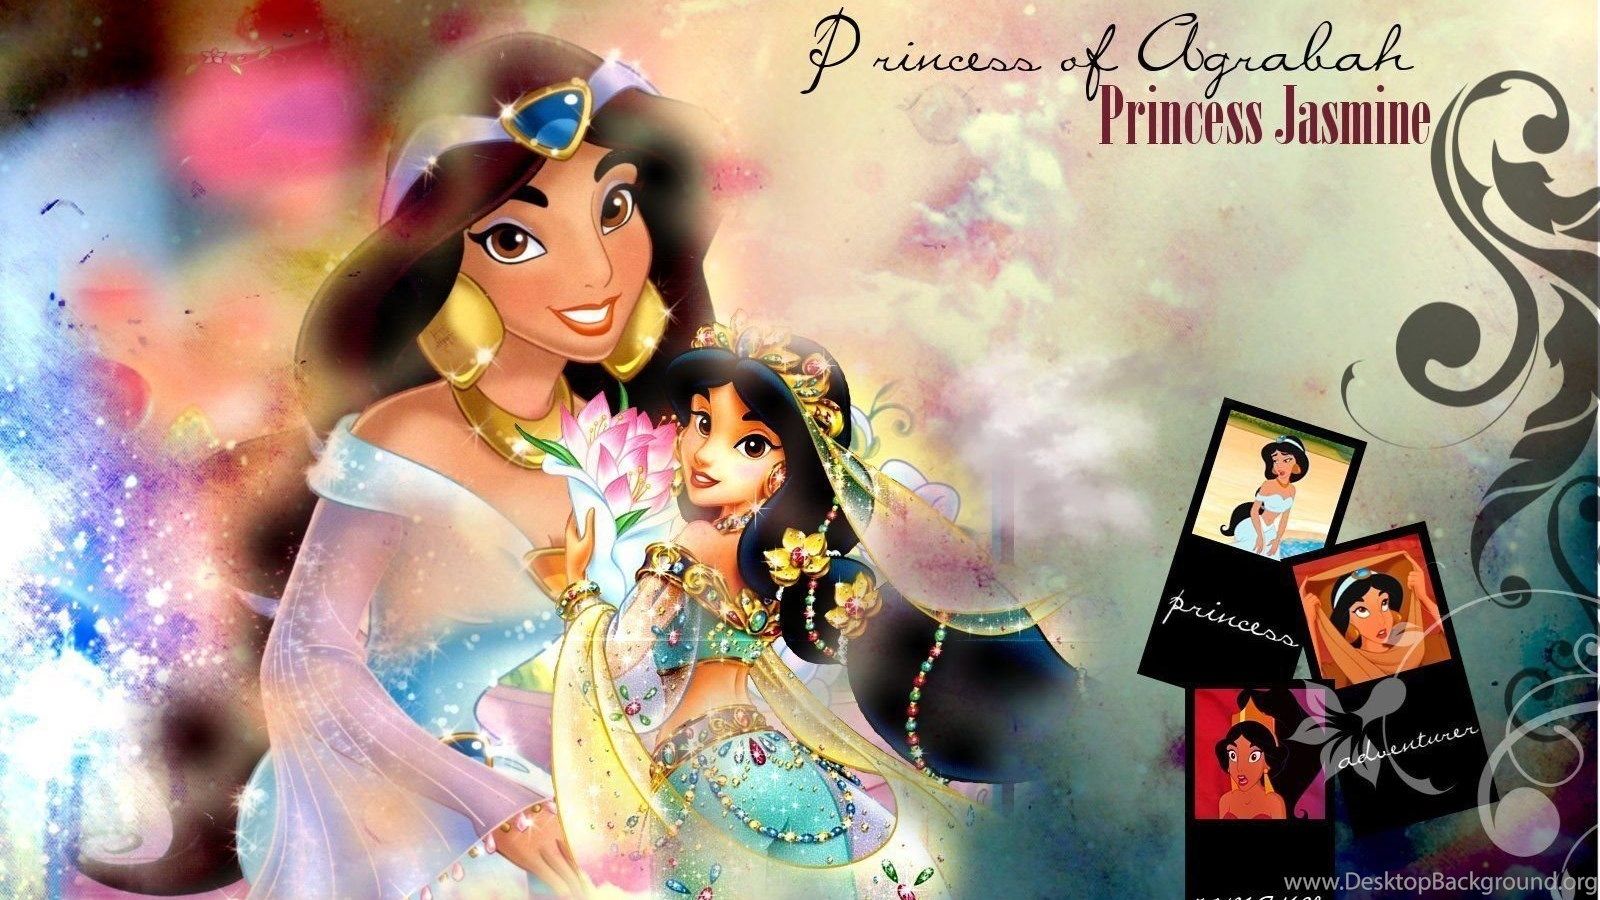 Princess Jasmine Aladdin Wallpaper .desktopbackground.org